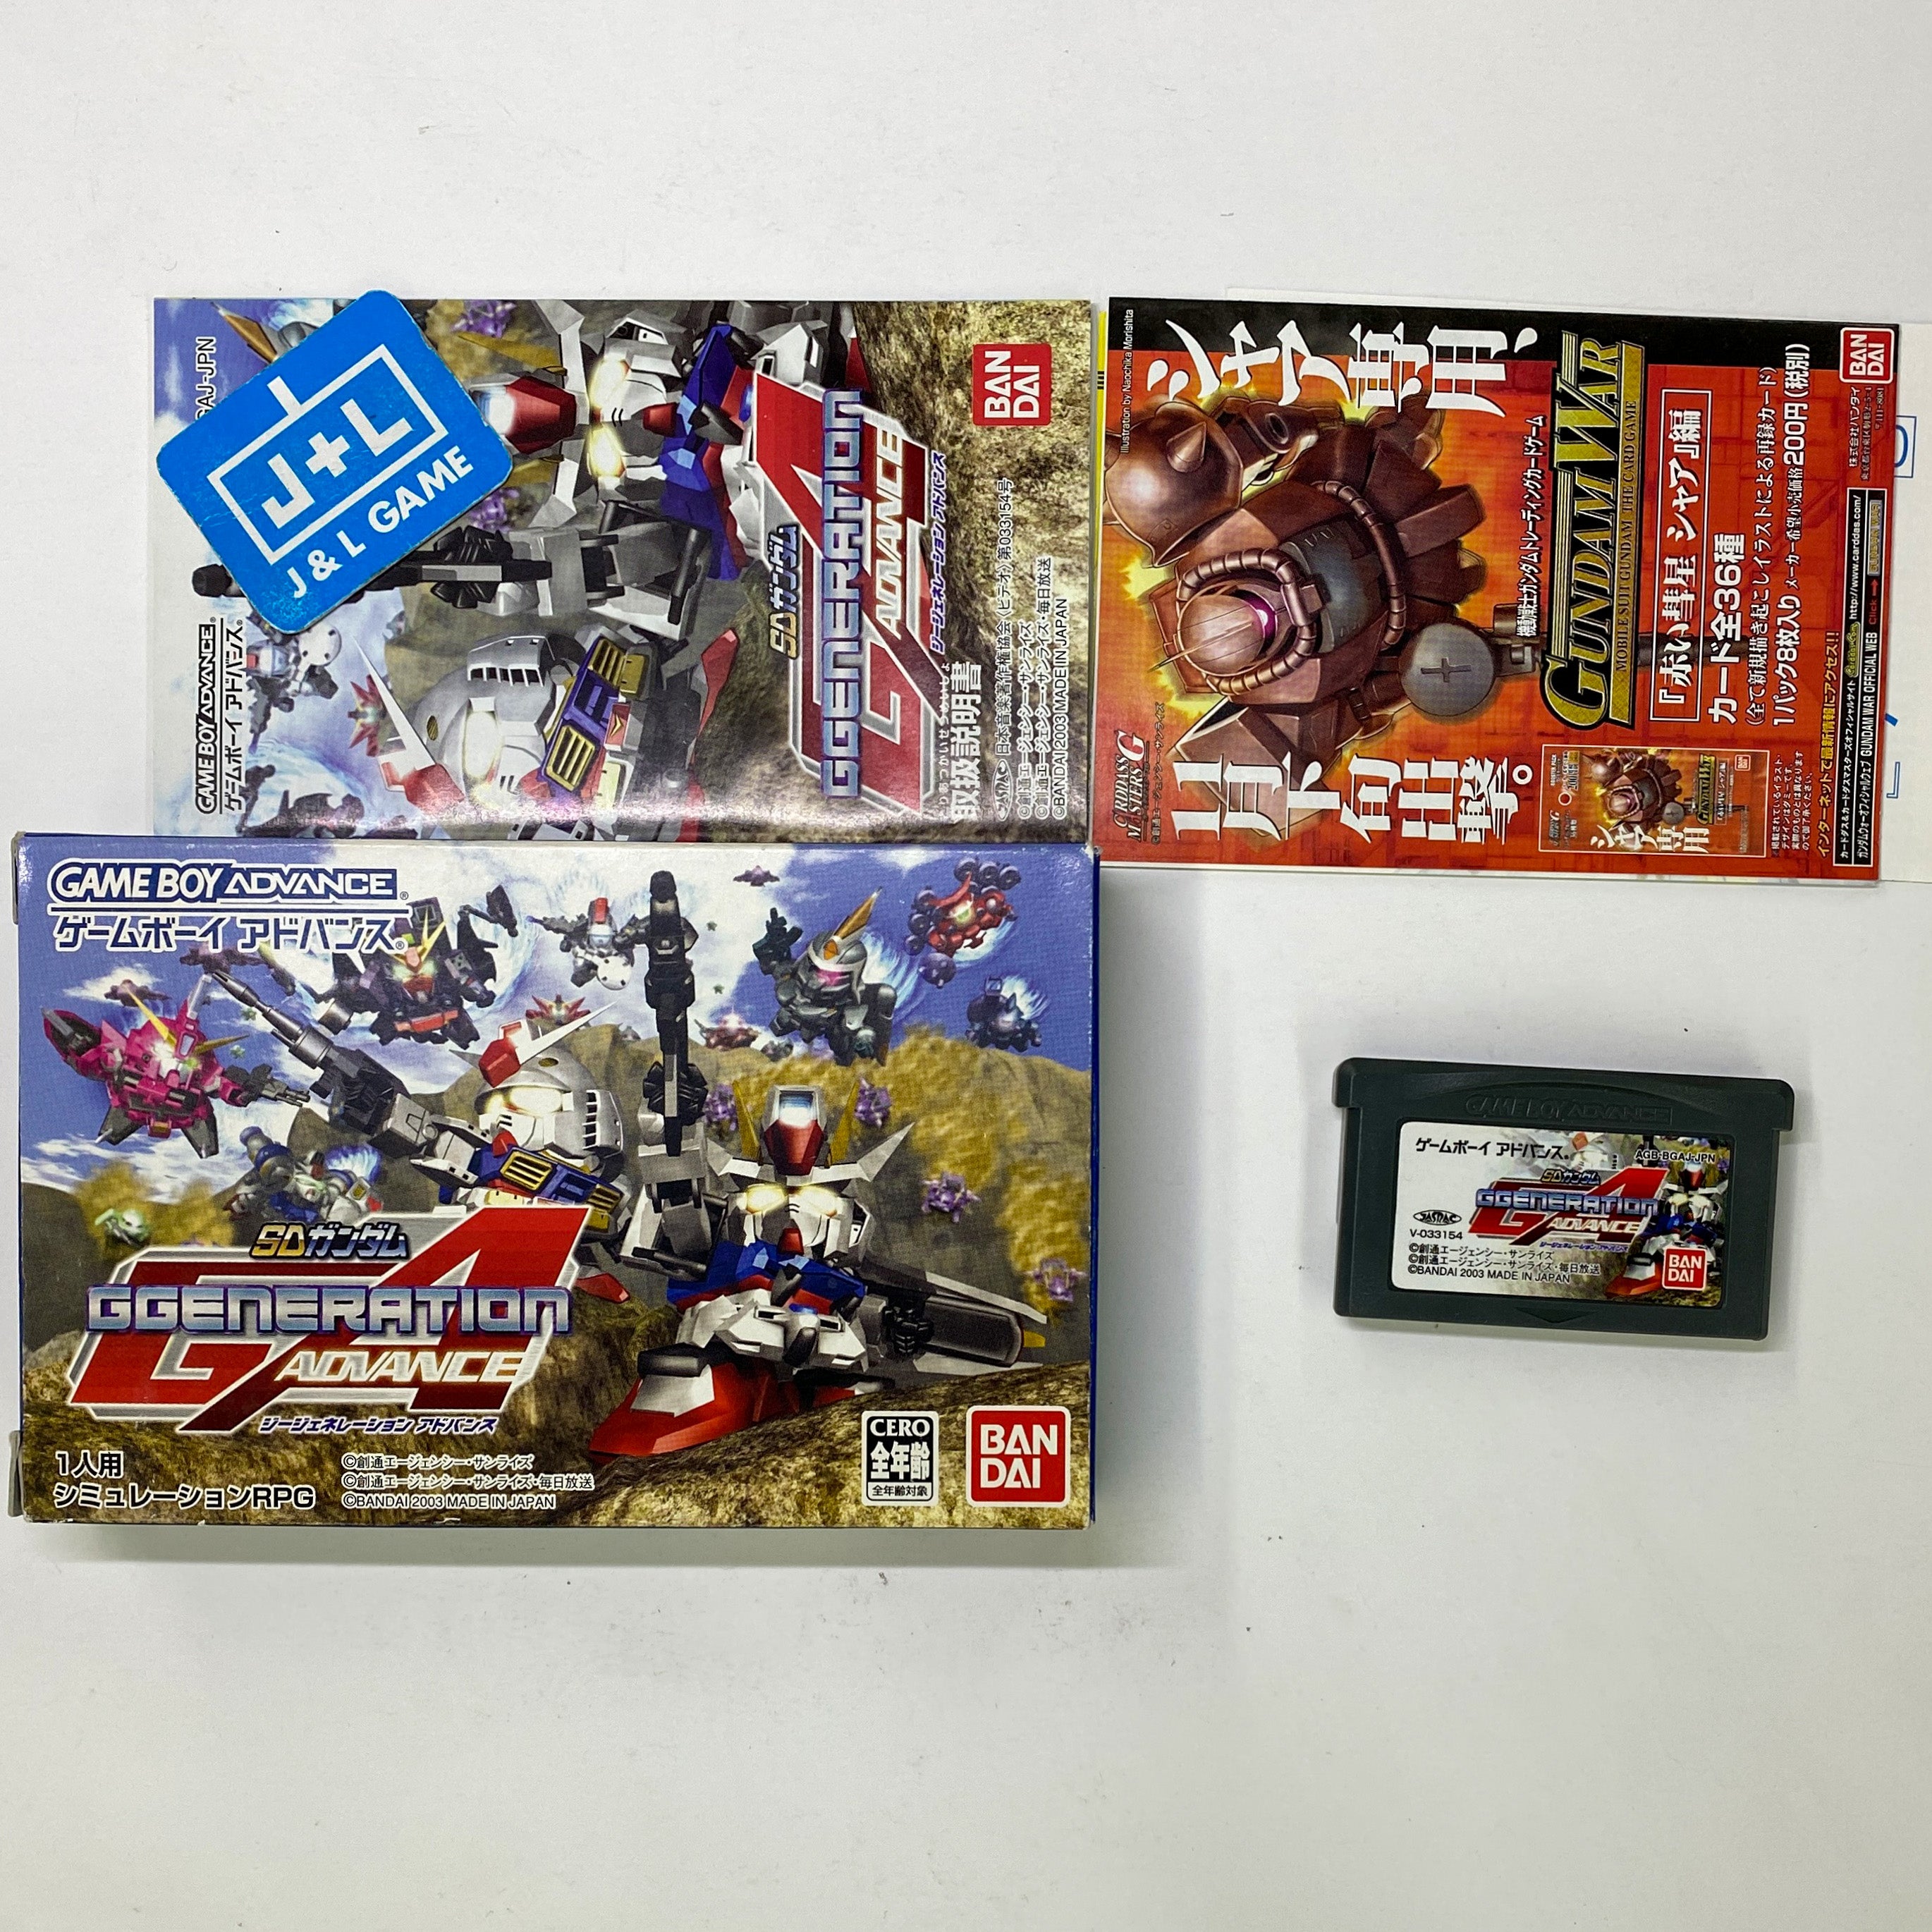 SD Gundam G Generation Advance - (GBA) Game Boy Advance (Japanese Import) [Pre-Owned] Video Games Bandai   